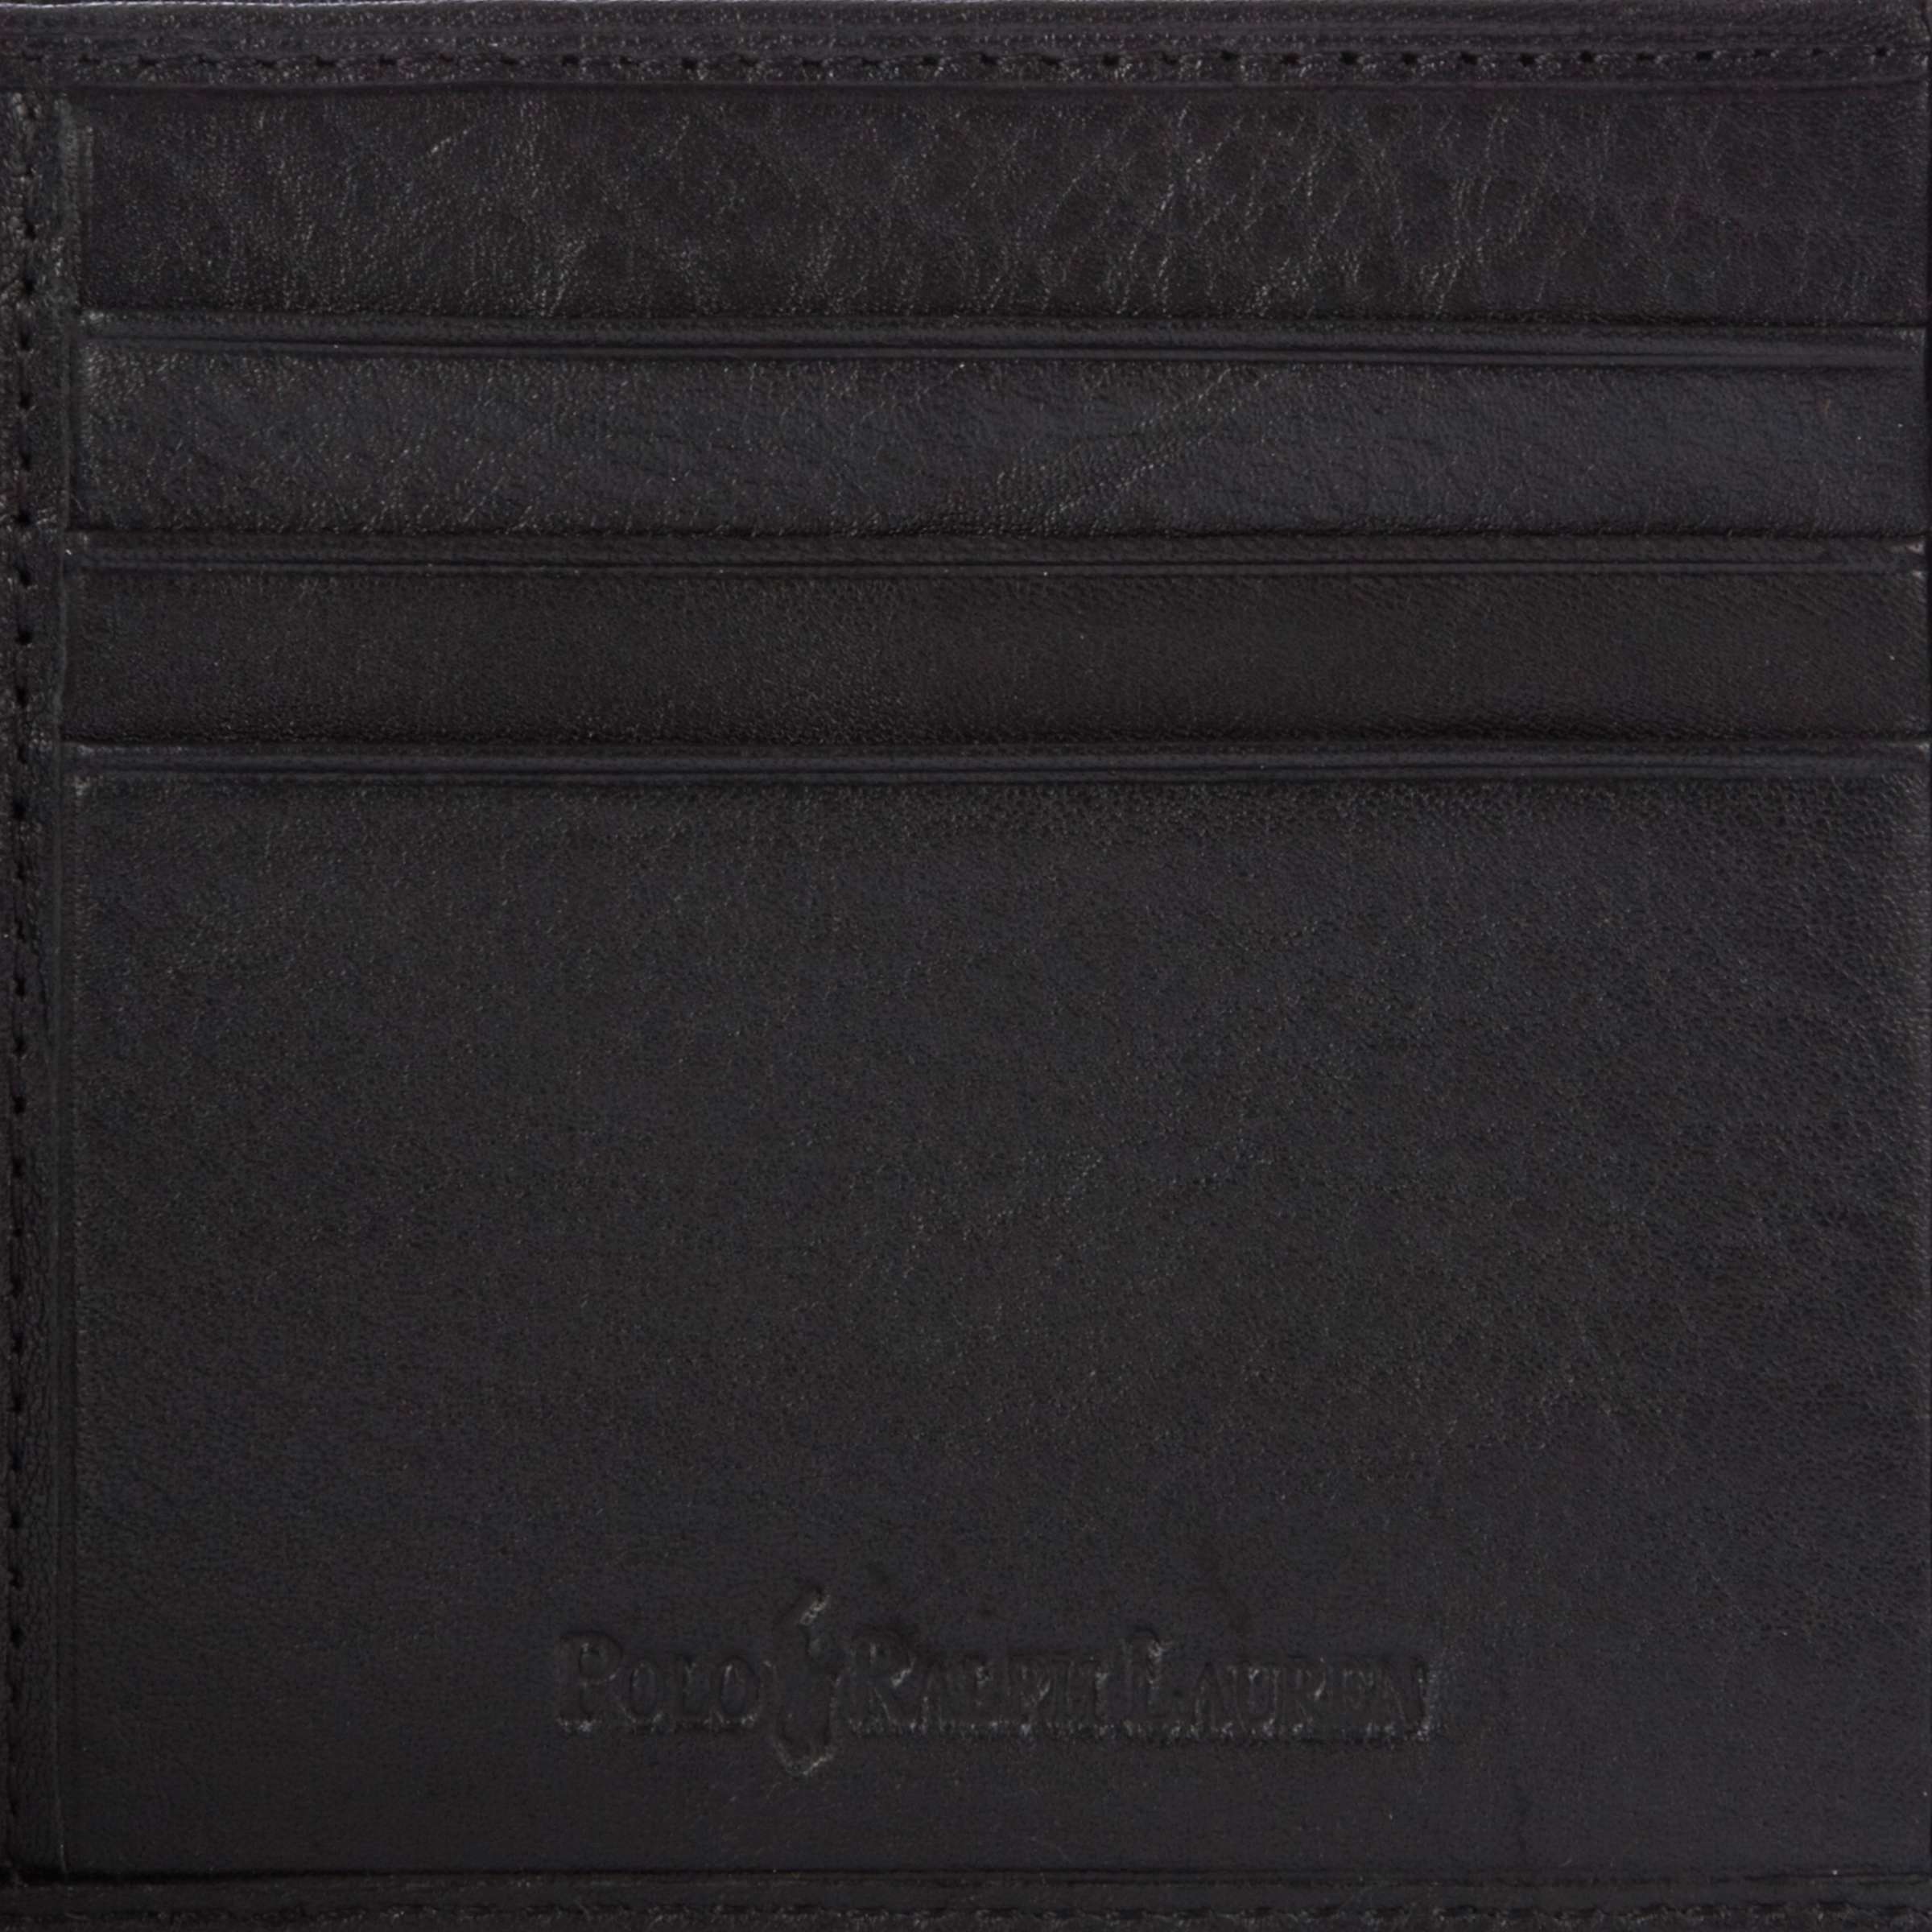 Buy Polo Ralph Lauren Pebble Grain Leather Wallet Online at johnlewis.com